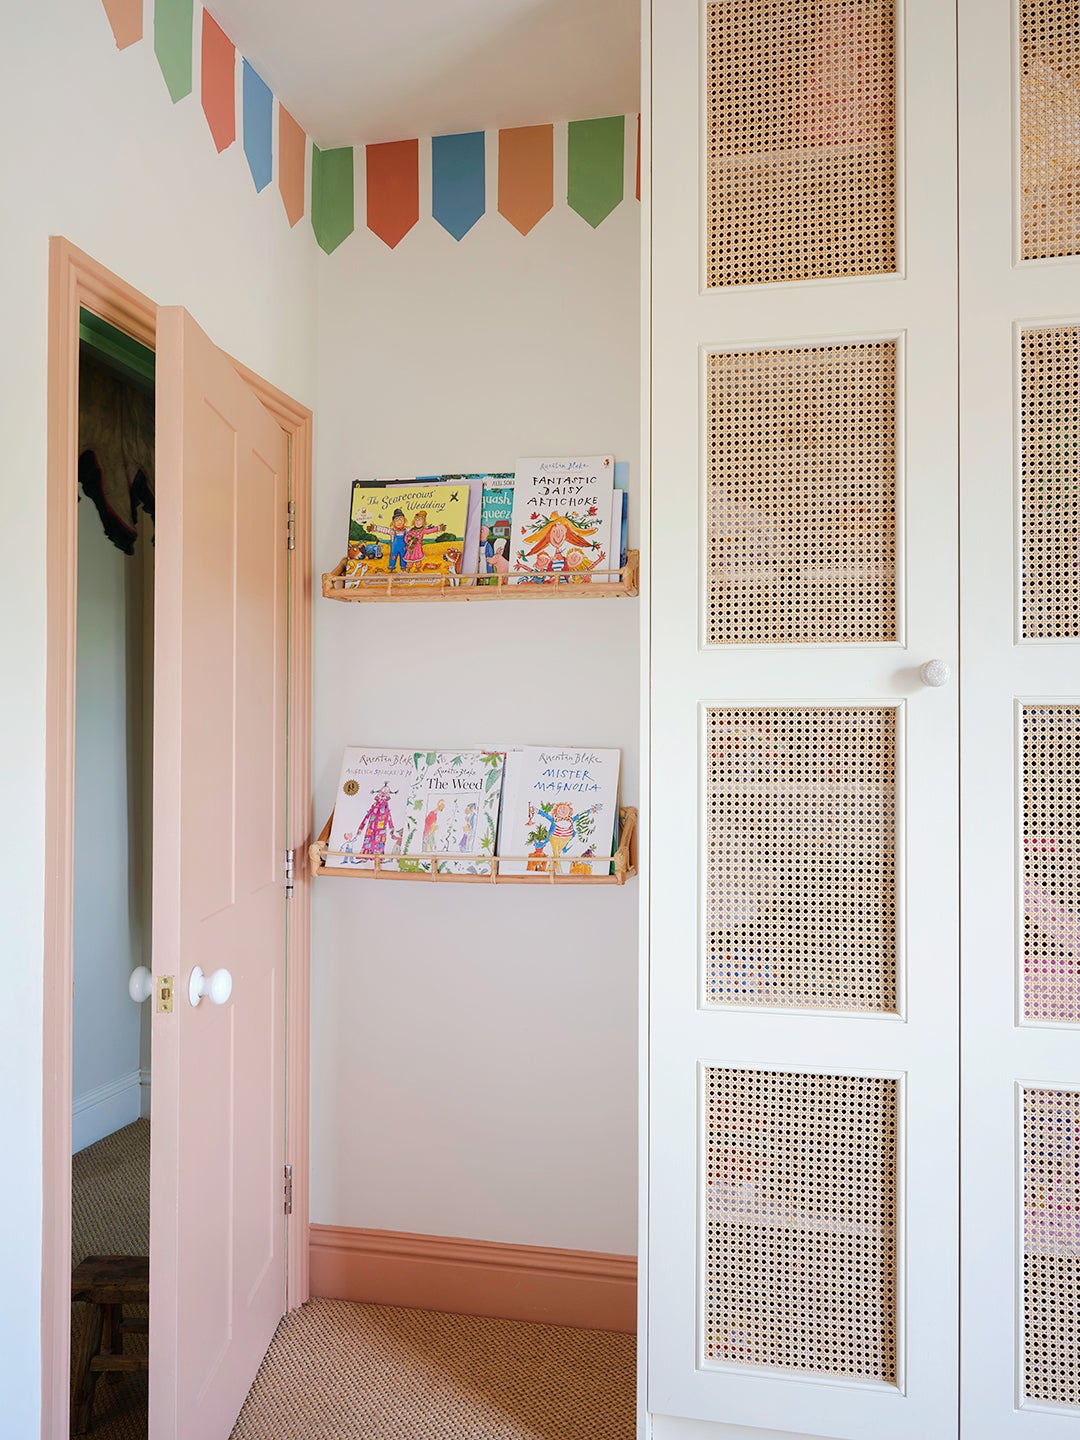 cane-paneled wardrobe in kids' room